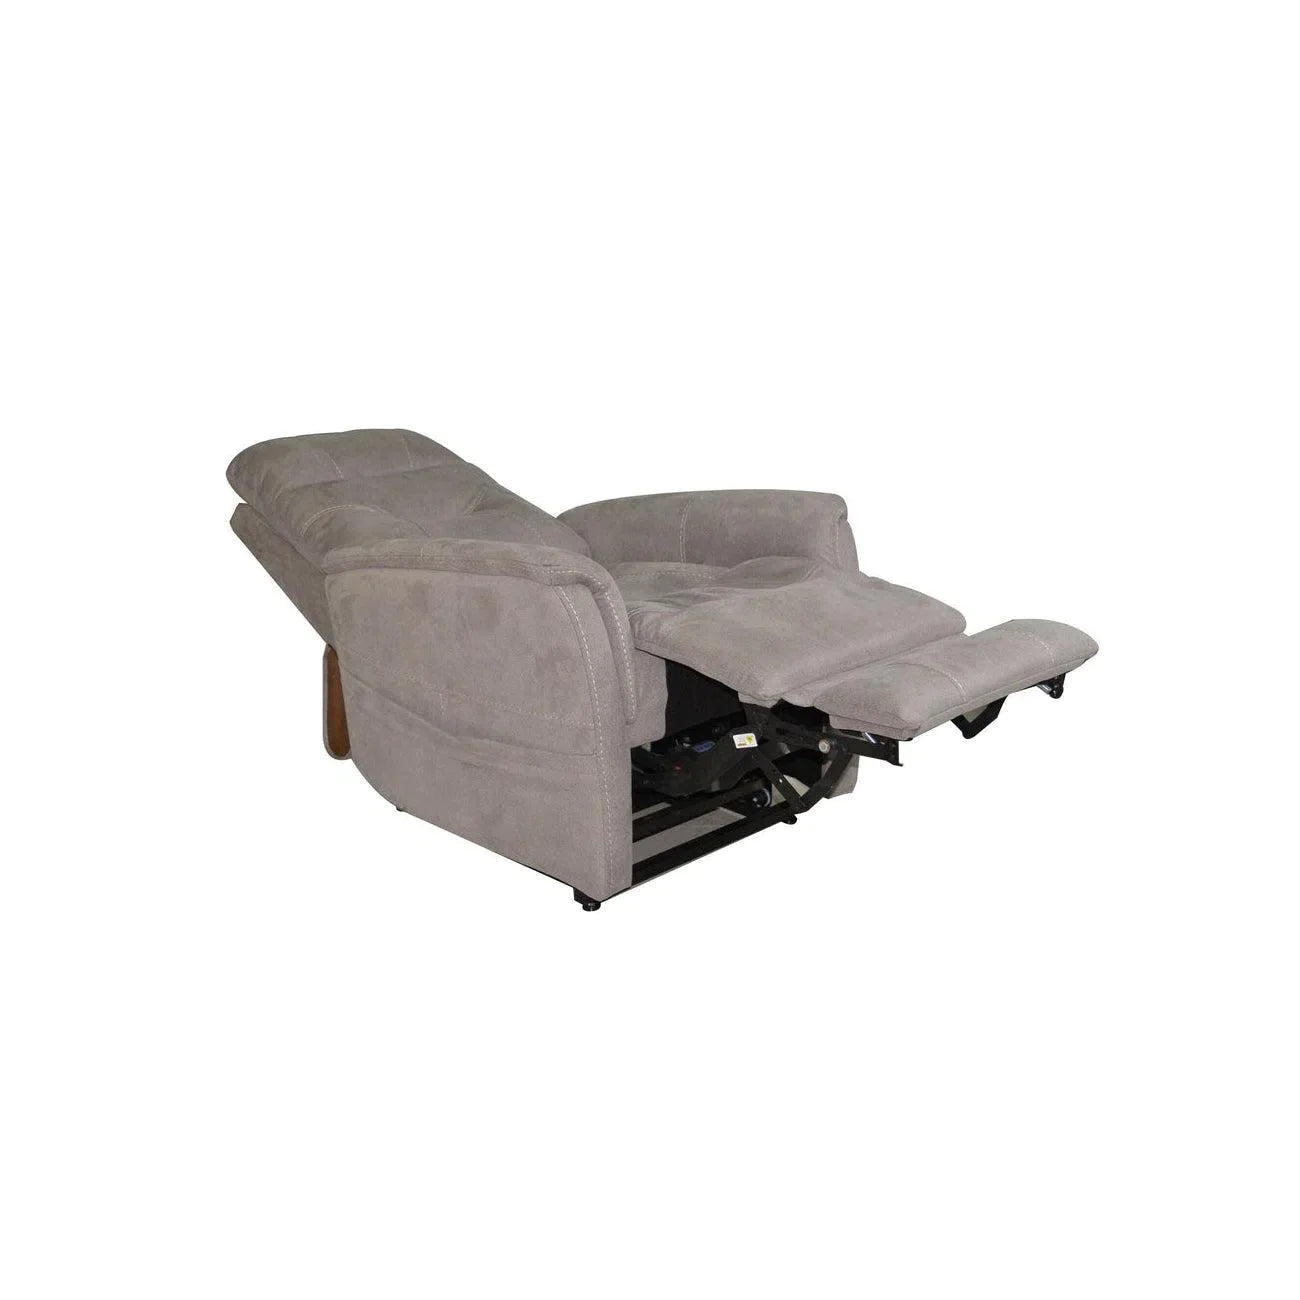 Ludlow Dual Motor Lift Chair with Headrest and Lumbar Adjust-Sleep Doctor